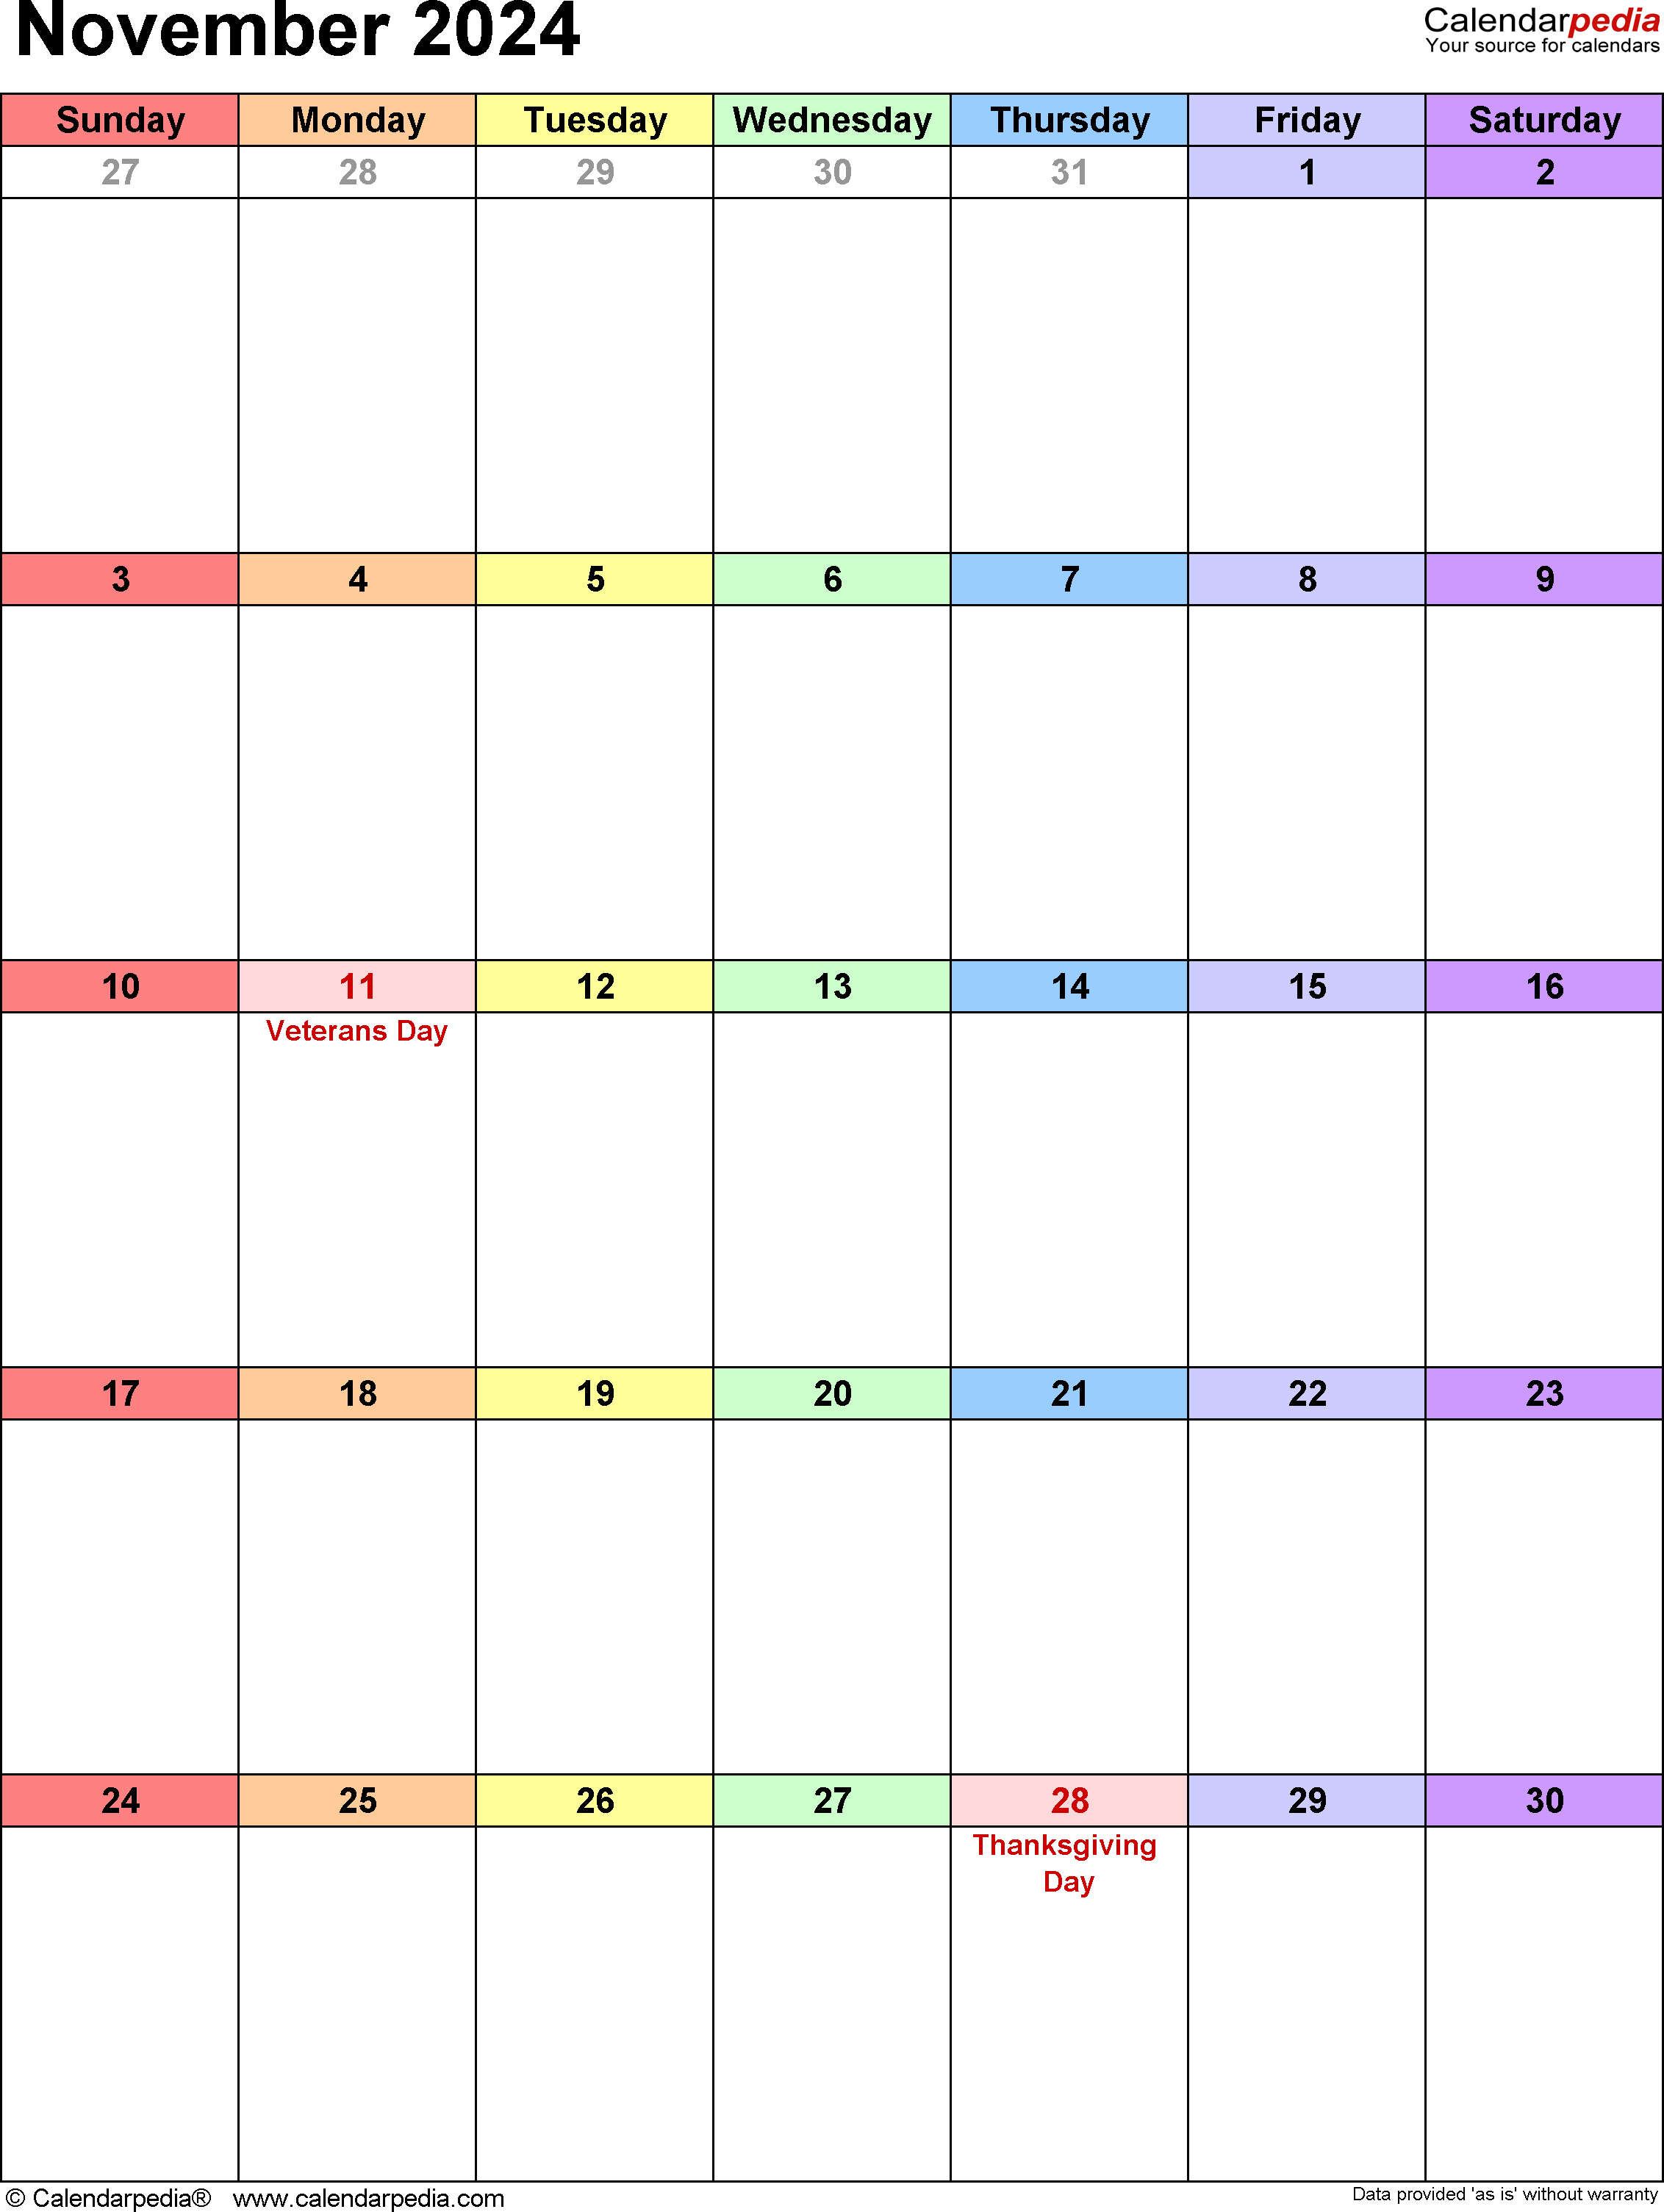 November 2024 Calendar | Templates For Word, Excel And Pdf for Free Printable Appointment Calendar November 2024 Calendar